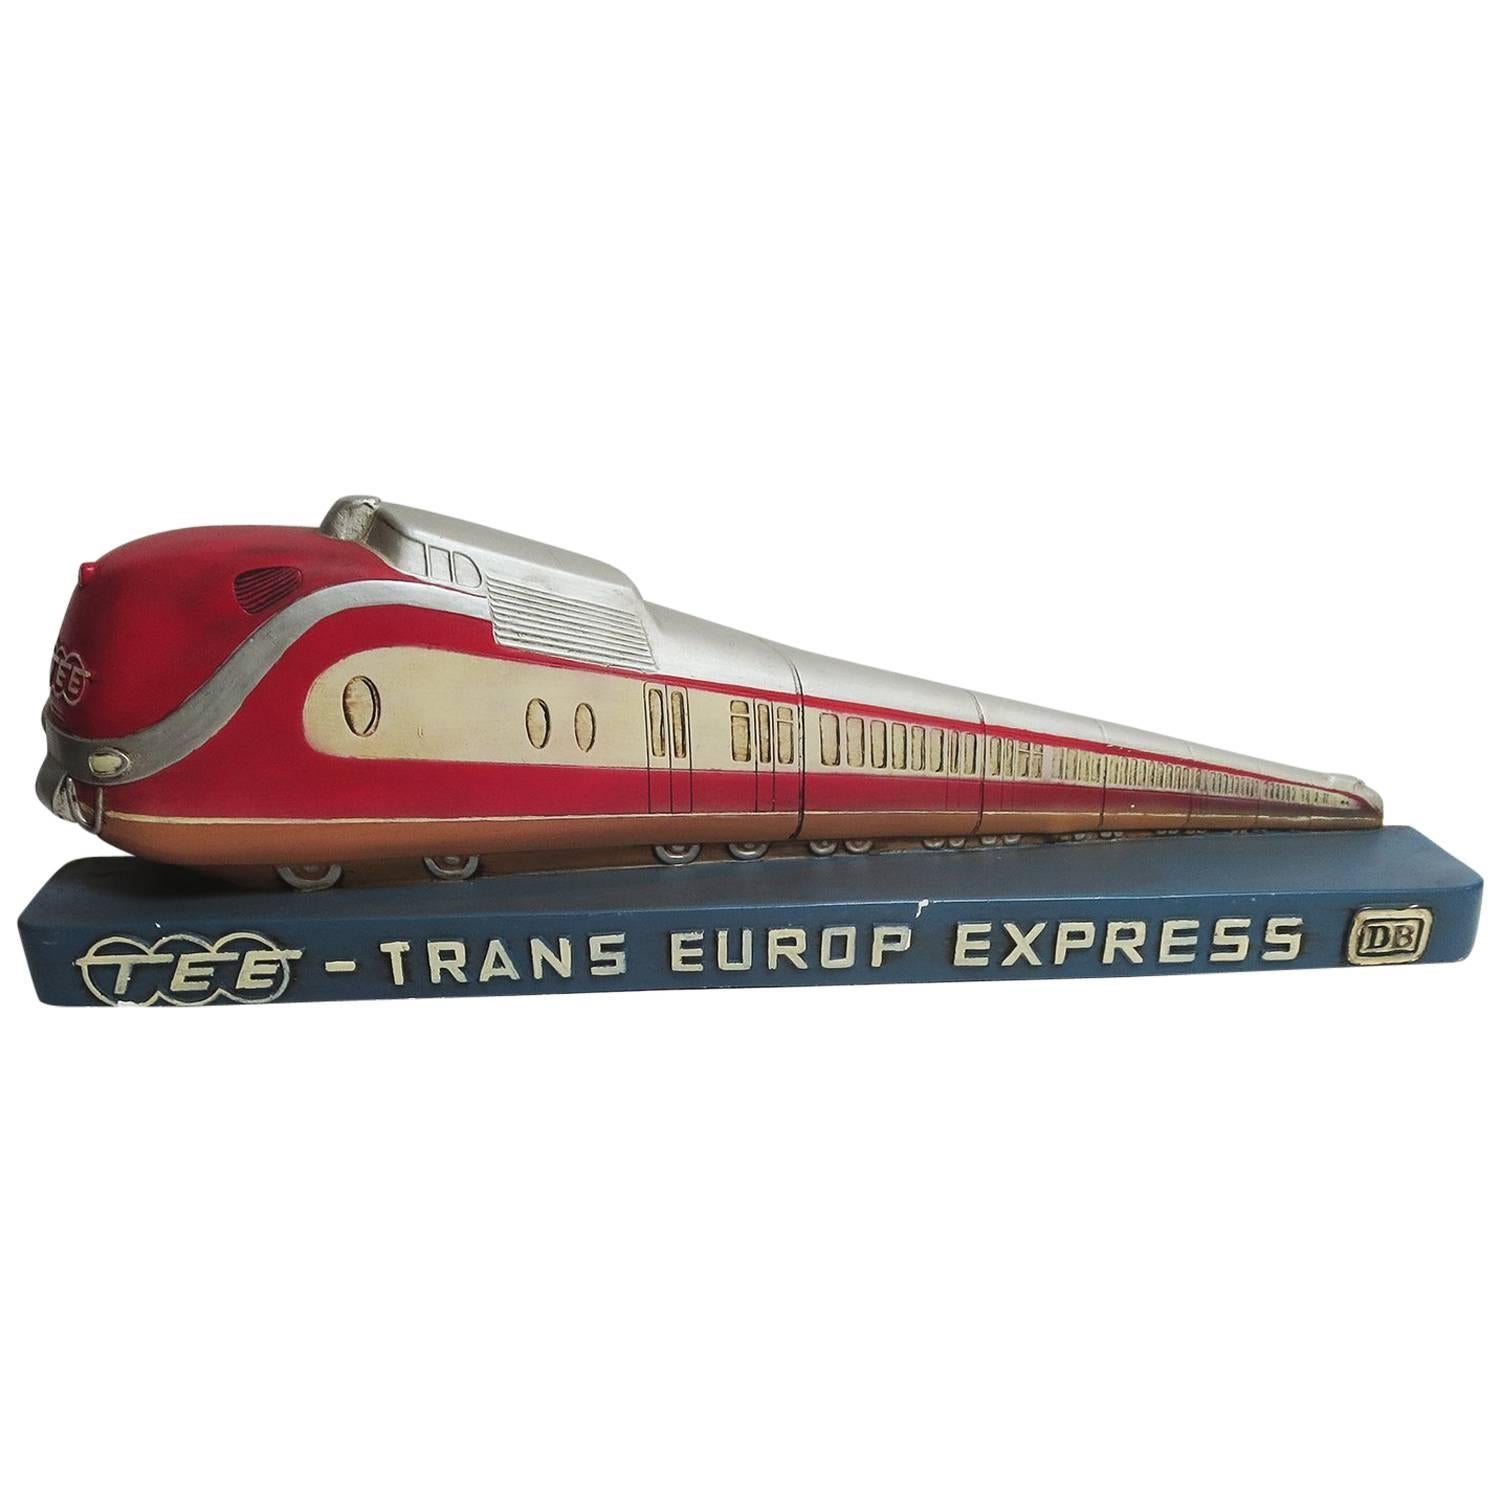 Trans Europ Express Rare Streamlined Plaster Train Display